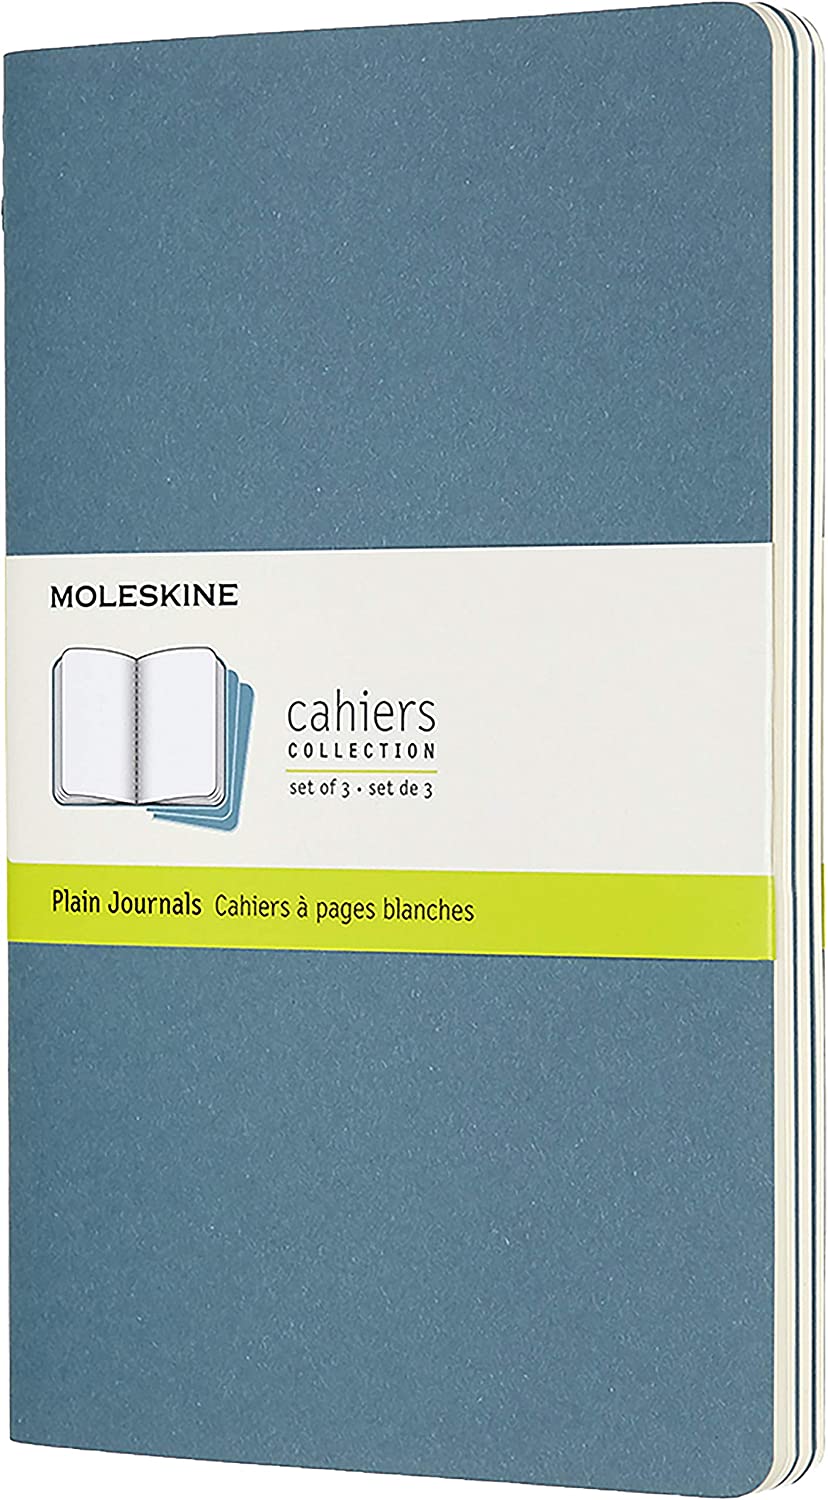 Moleskine Papir Pocket / Brisk Blue Moleskine Cahiers Journals - Plain